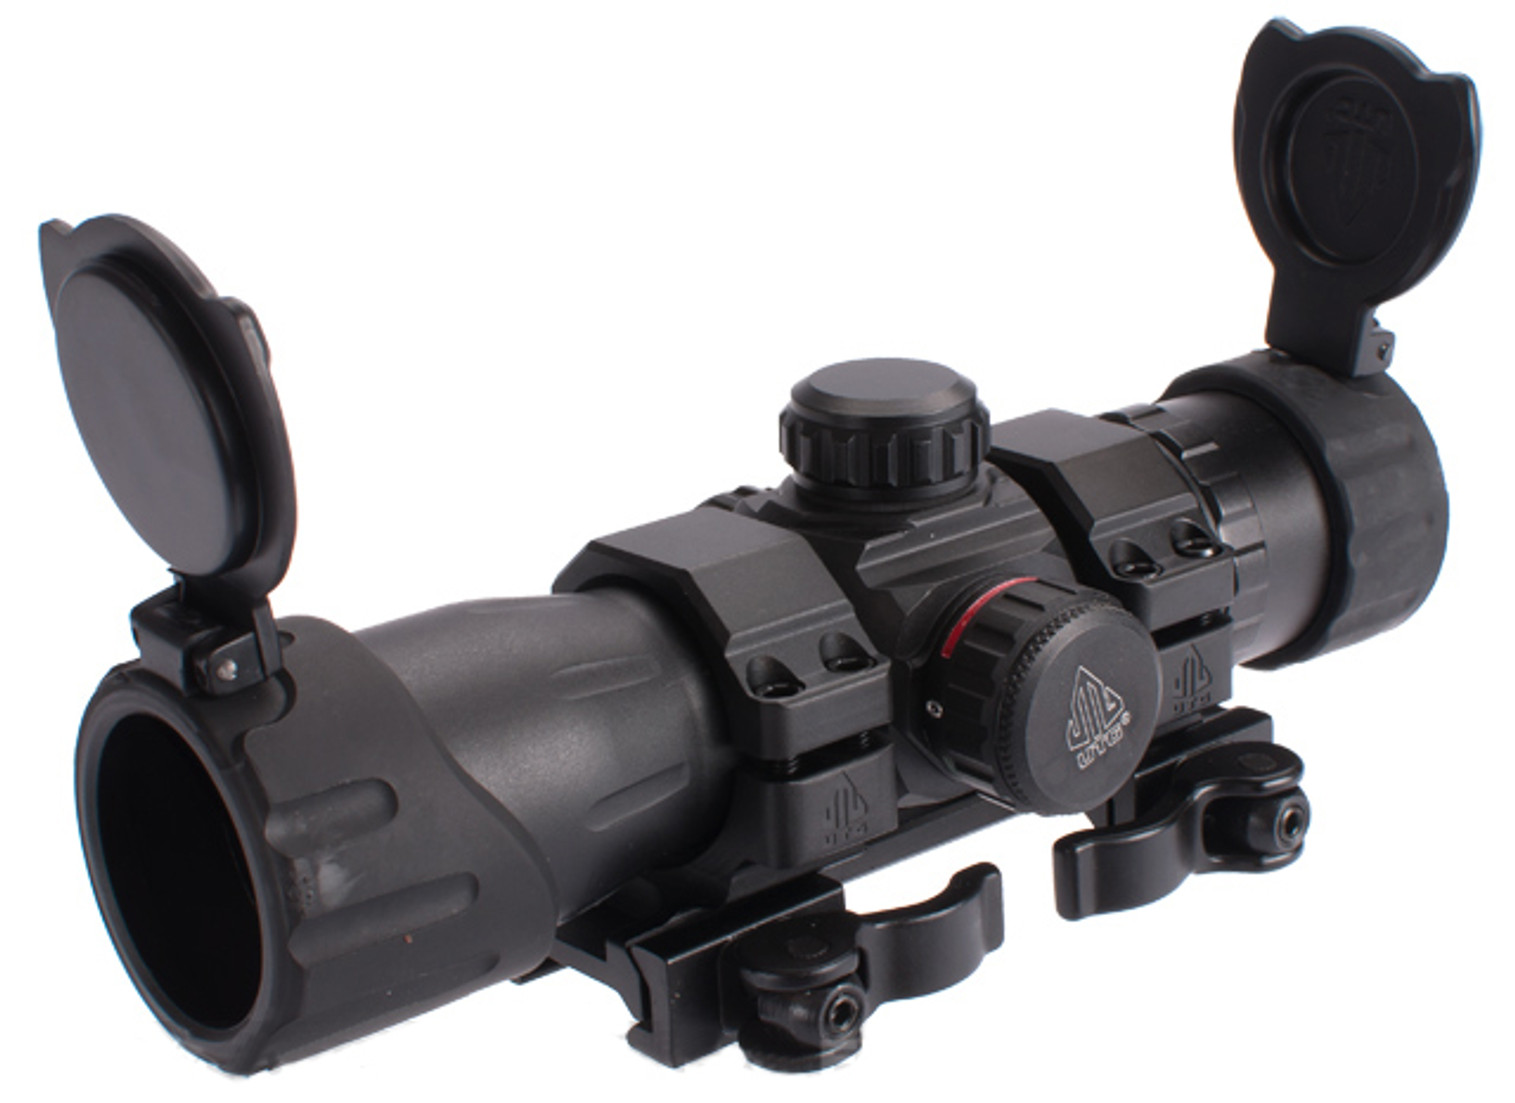 UTG 6.4" ITA Red/Green Dot Sight with Integral QD Mount & Flip-open Lens Caps